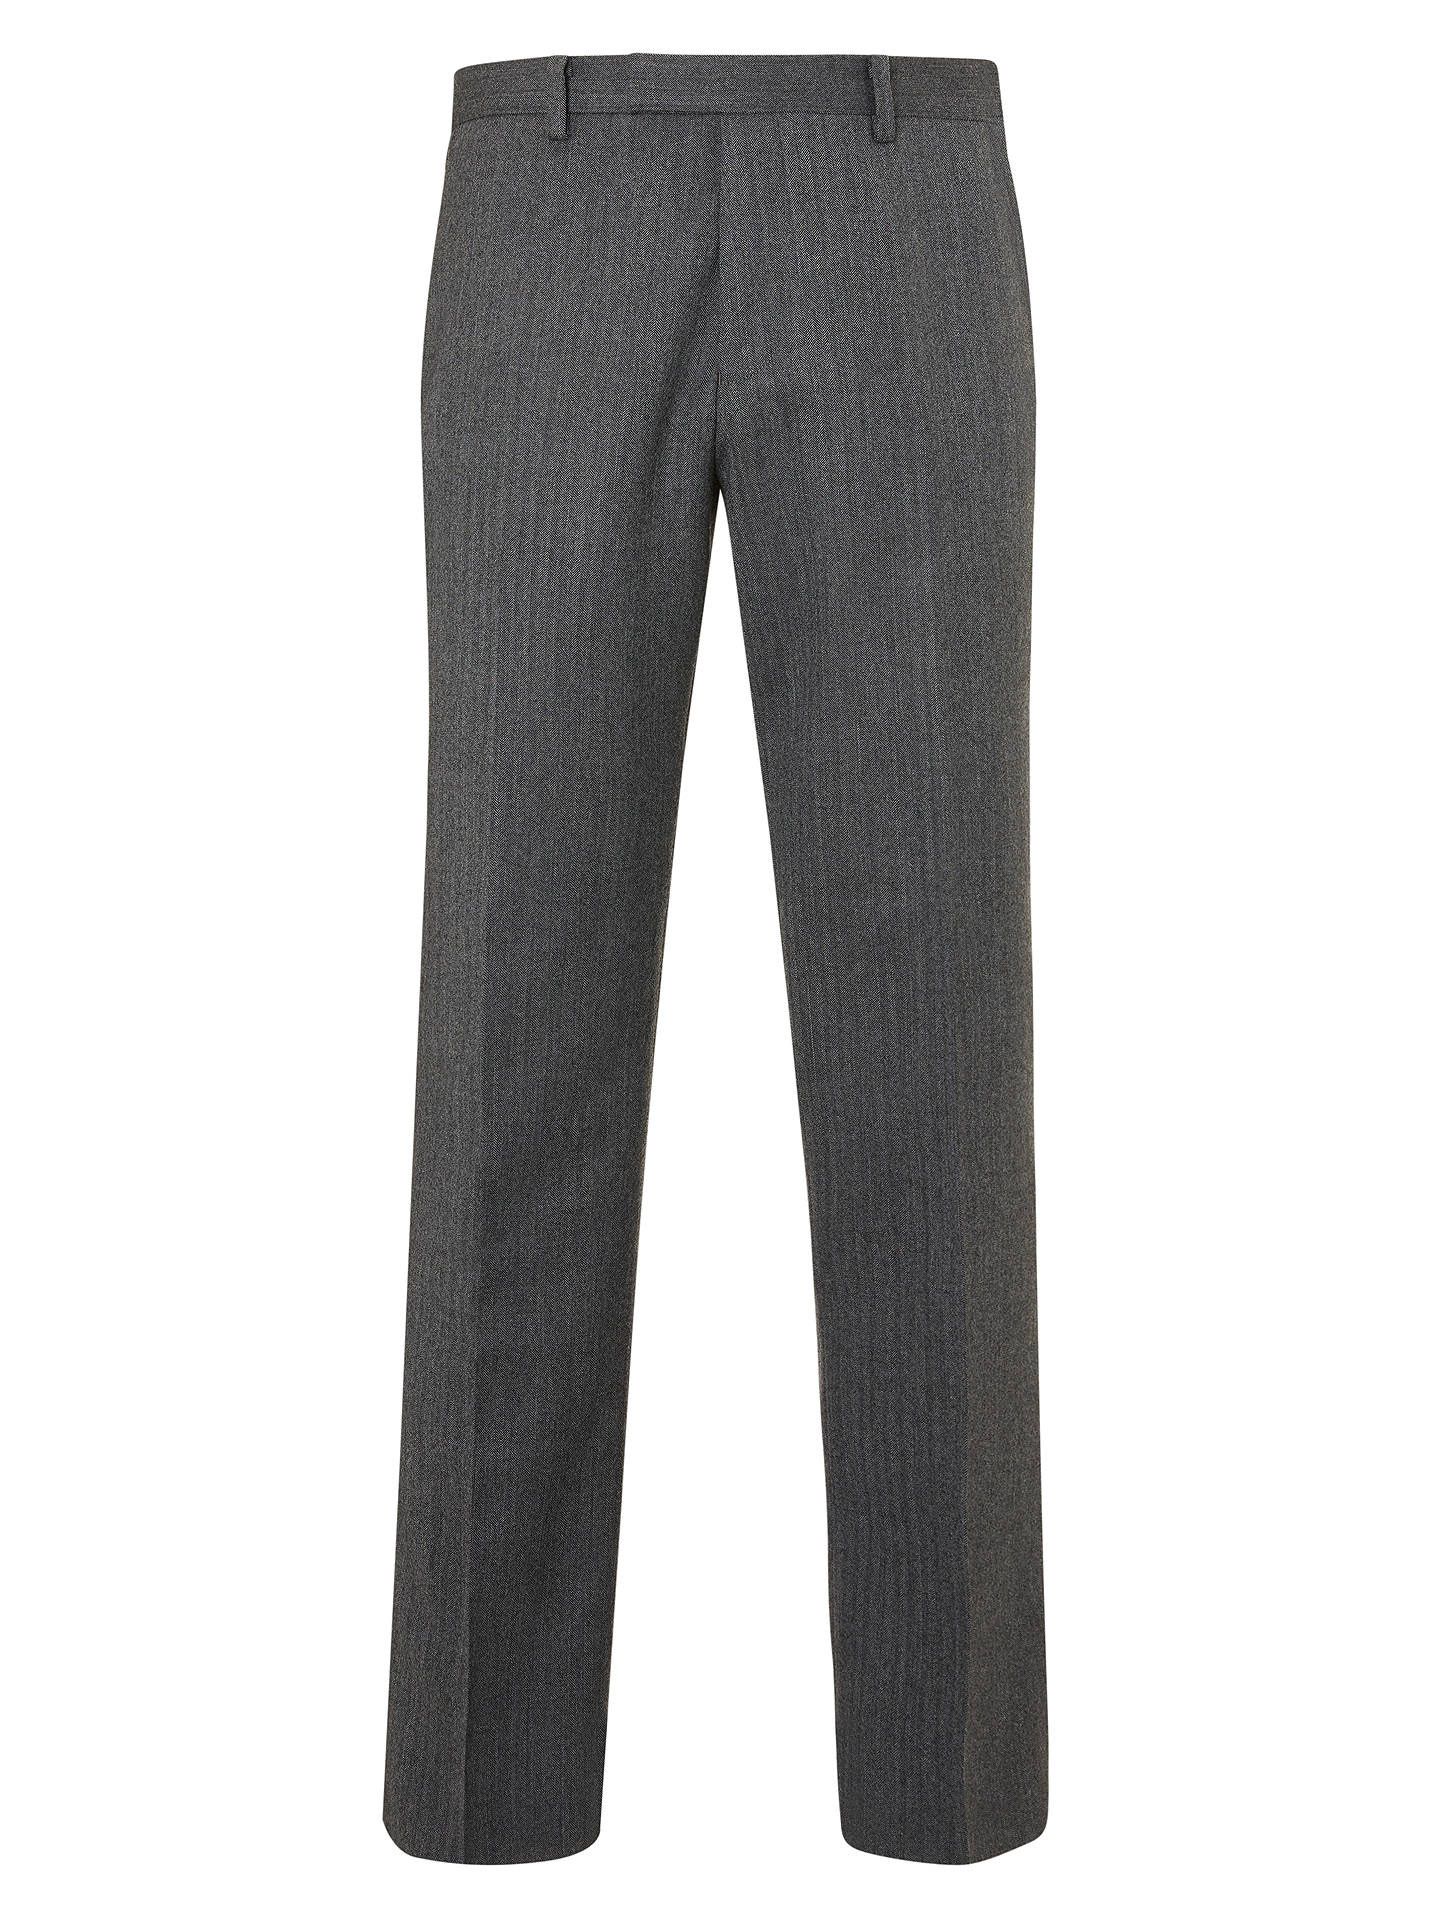 John Lewis & Partners Herringbone Tailored Grey Suit Trousers